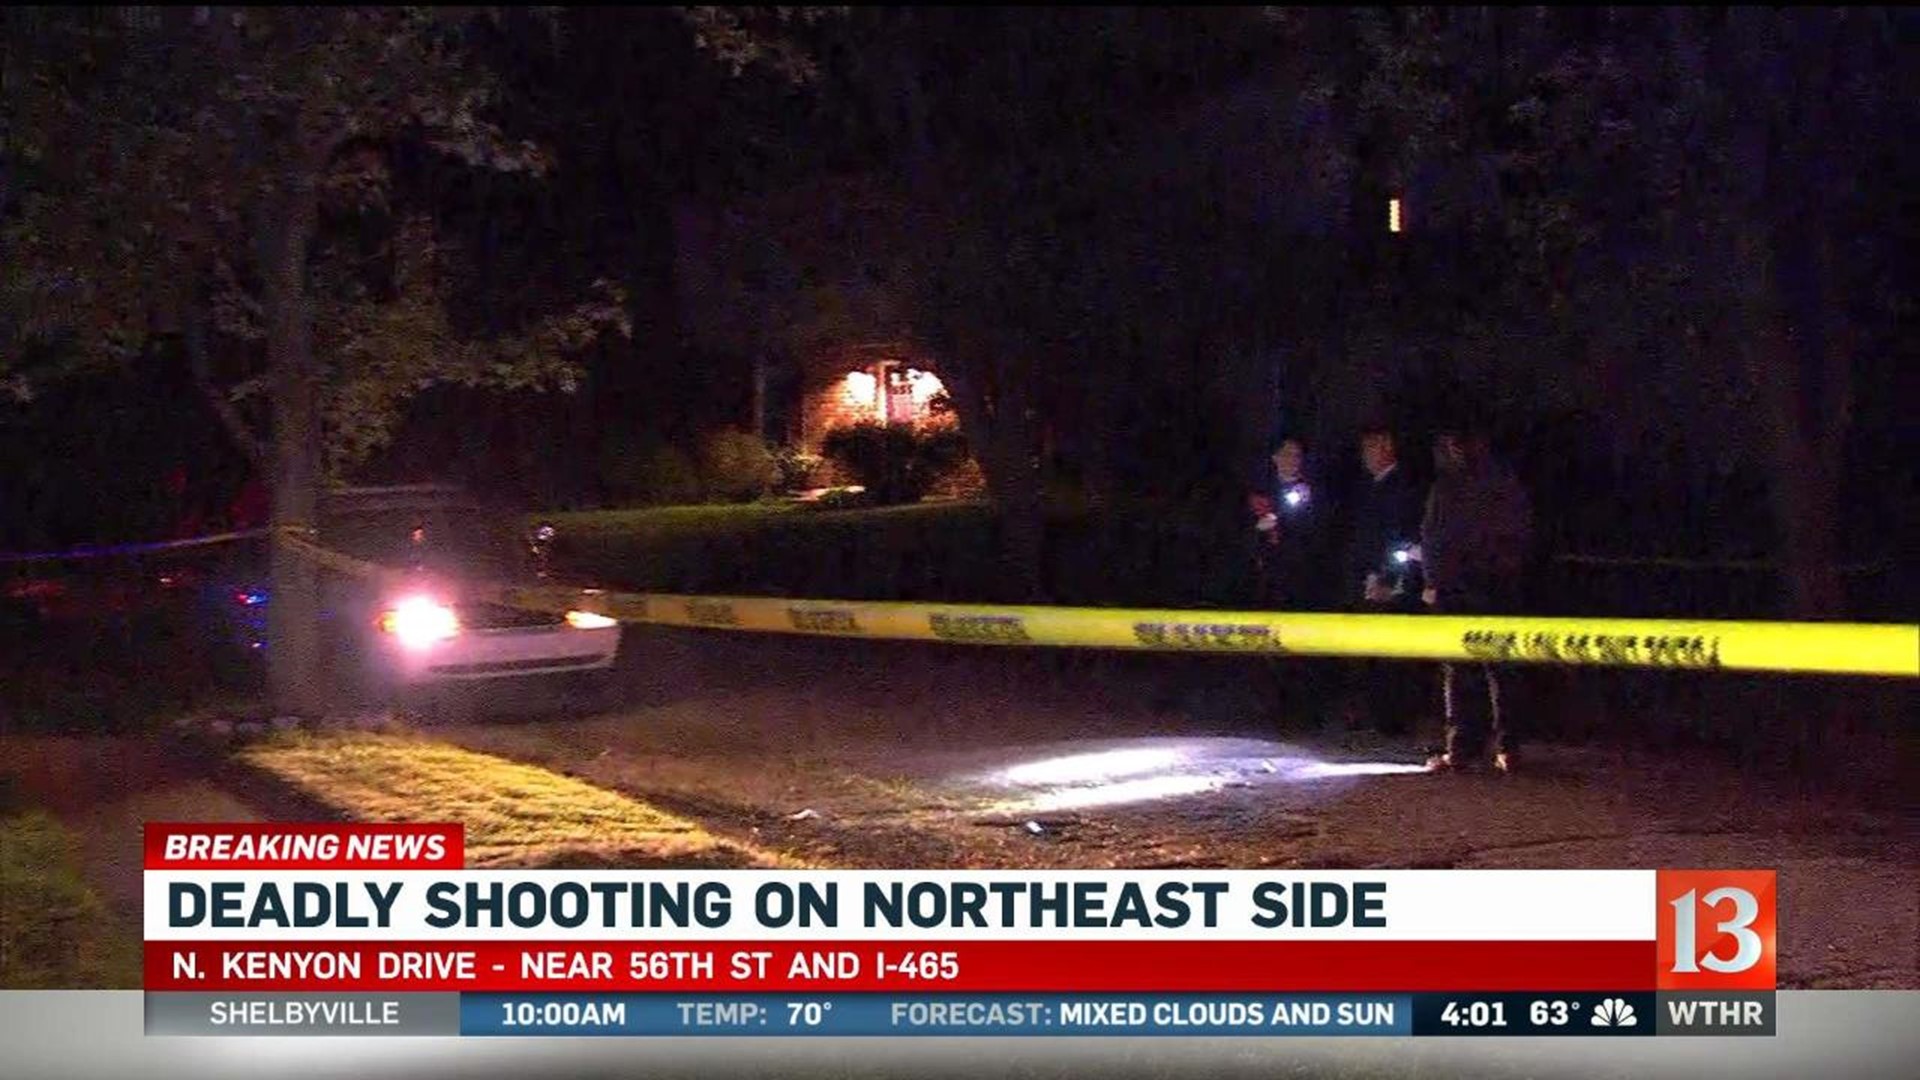 Northeast side fatal shooting